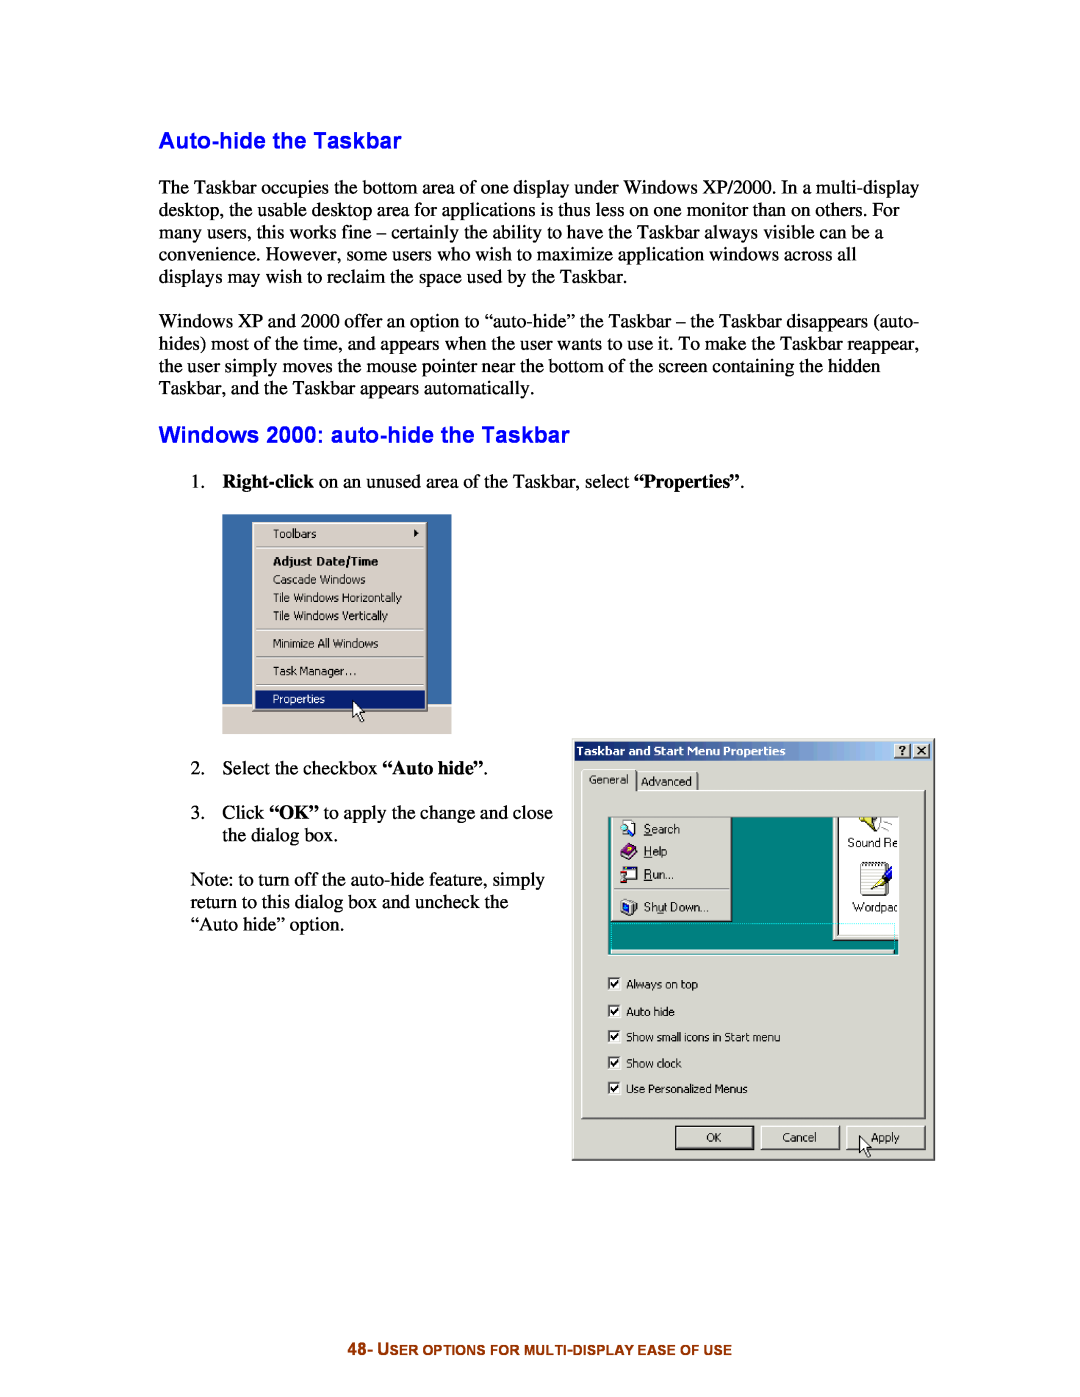 Digital Tigers SideCar MMS Series manual Auto-hide the Taskbar, Windows 2000 auto-hide the Taskbar 